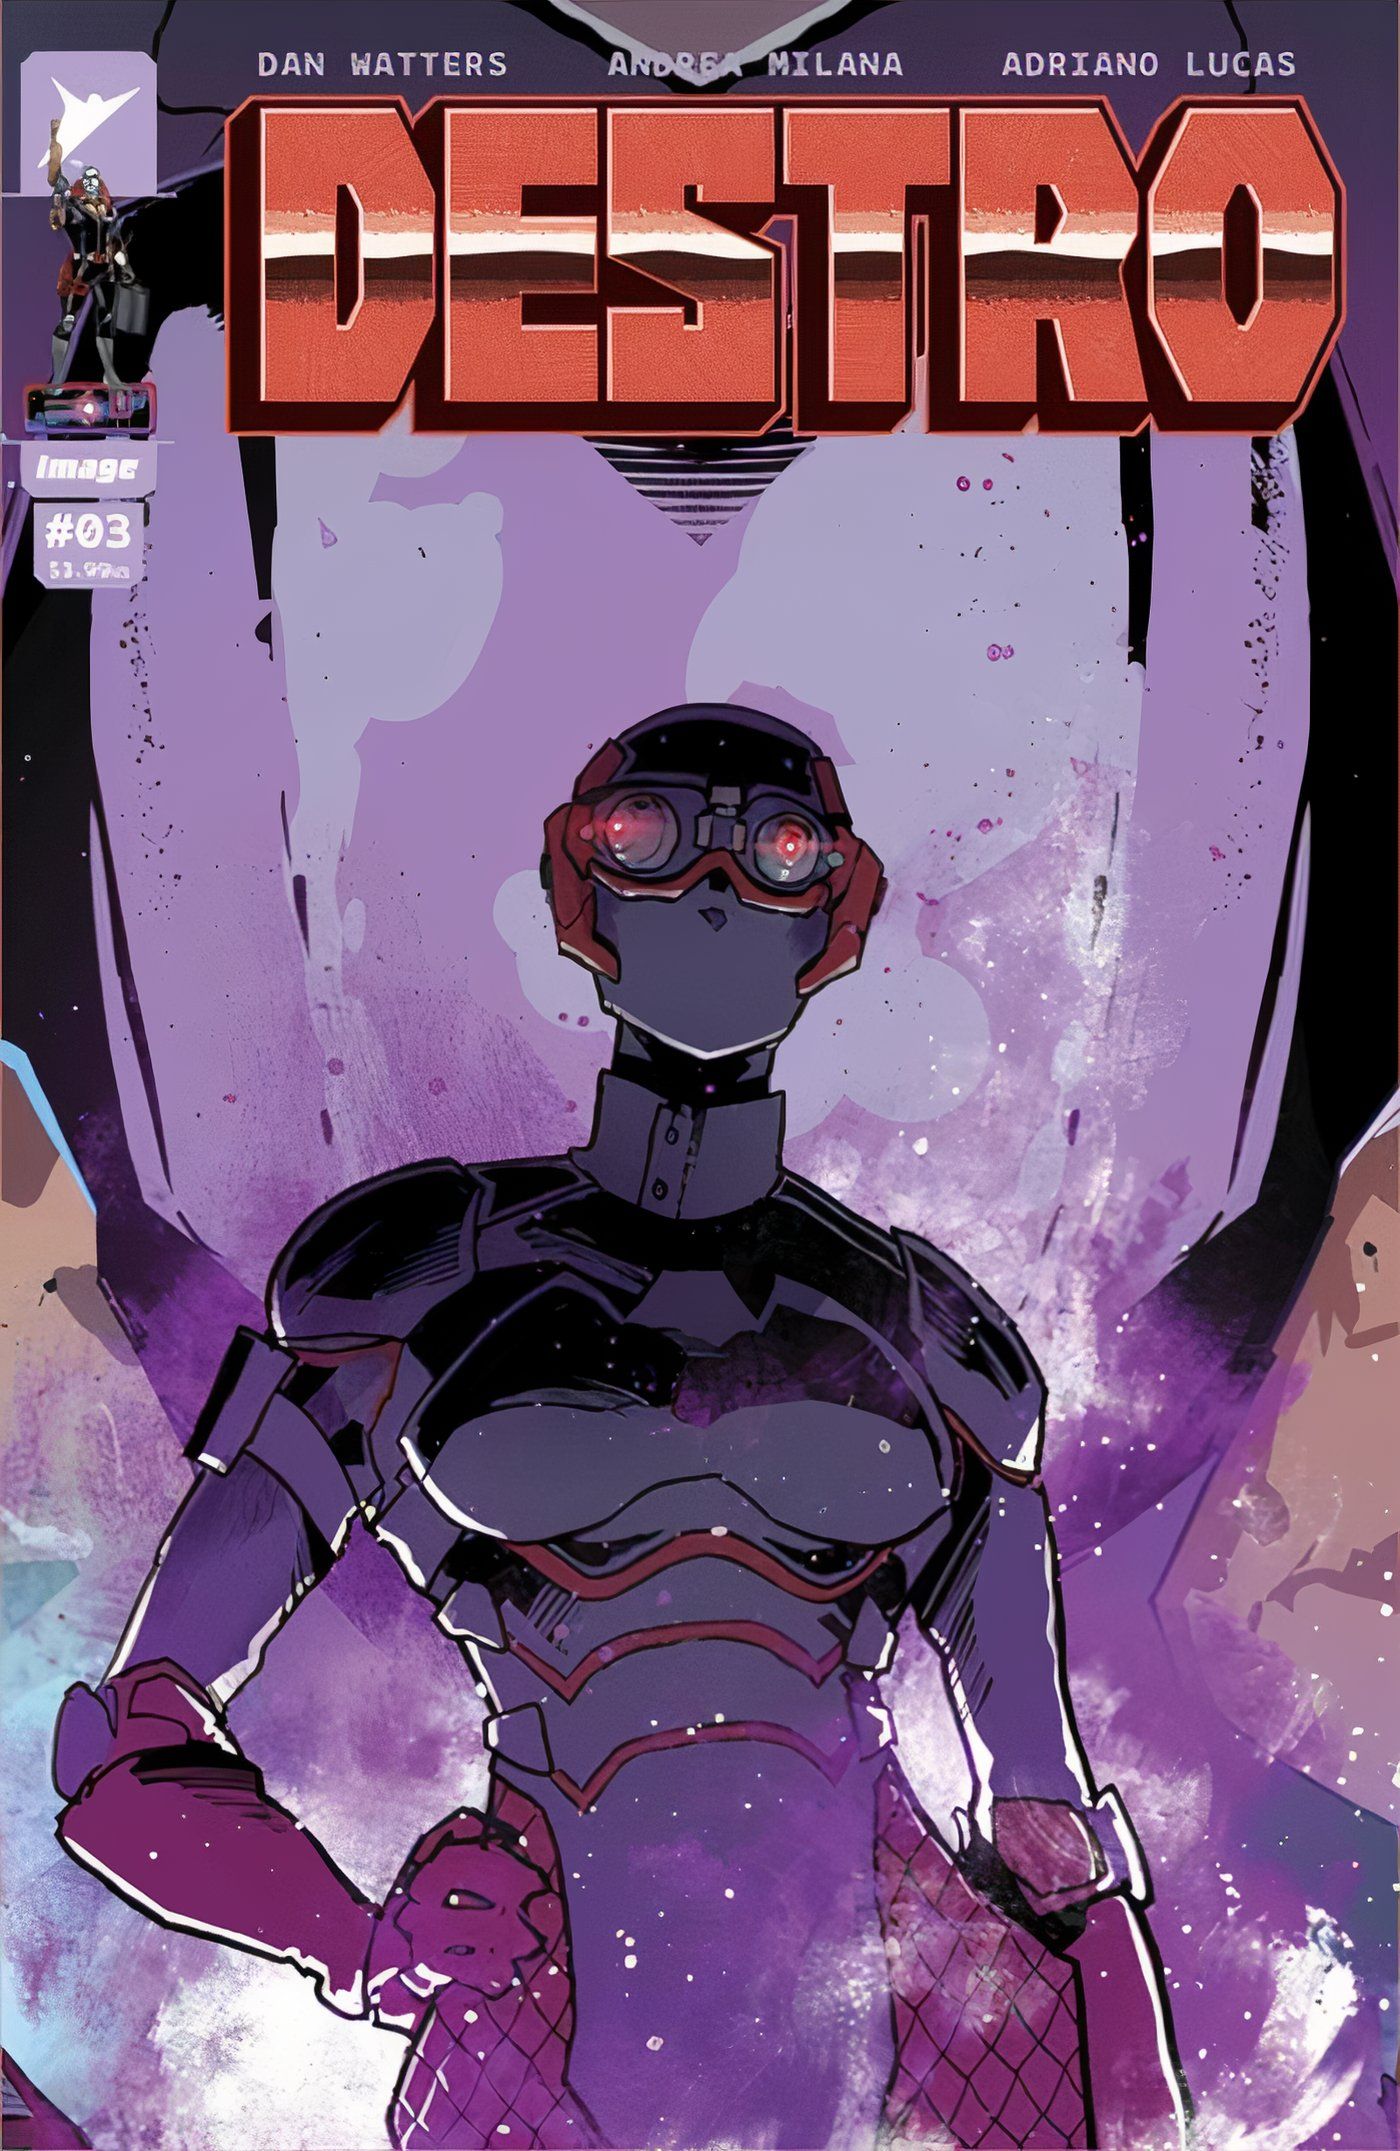 Destro #3 variant cover by Nikola Cizemija, the mysterious assassin Chameleon against the backdrop of Cobra Commander's face.